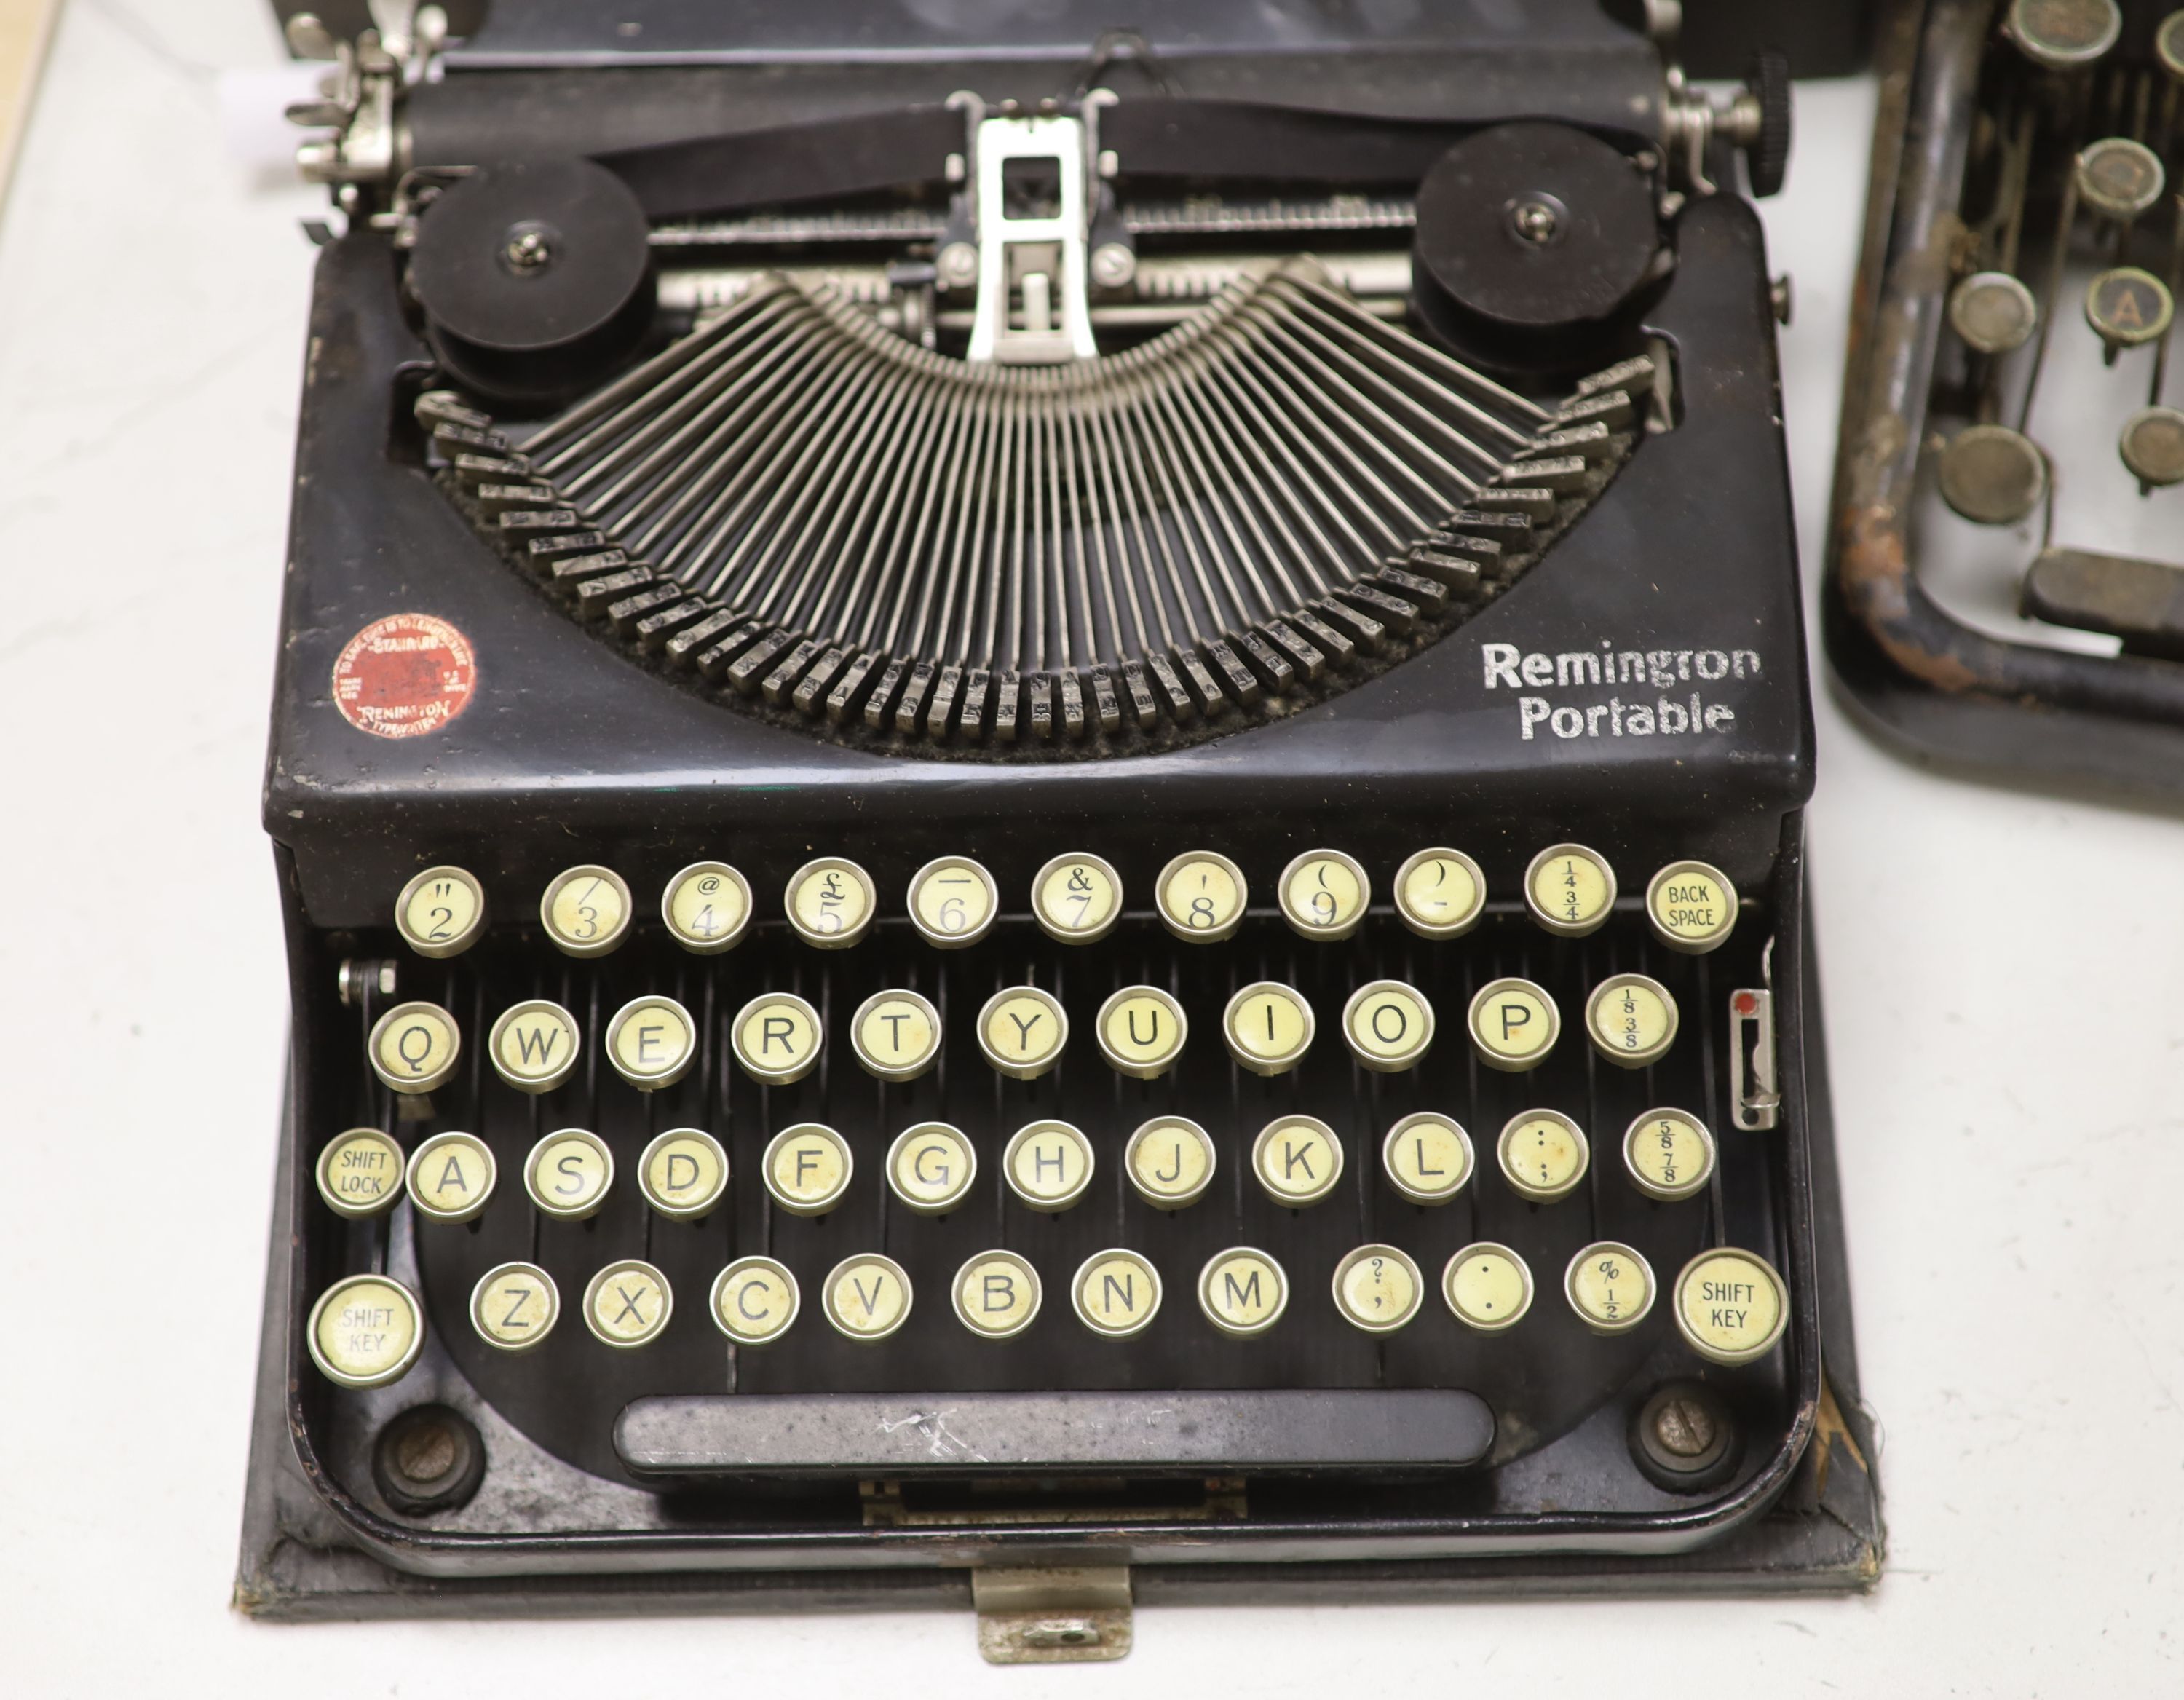 Three vintage typewriters: Underwood Standard portable, Remington Portable and Royal Typewriter Company